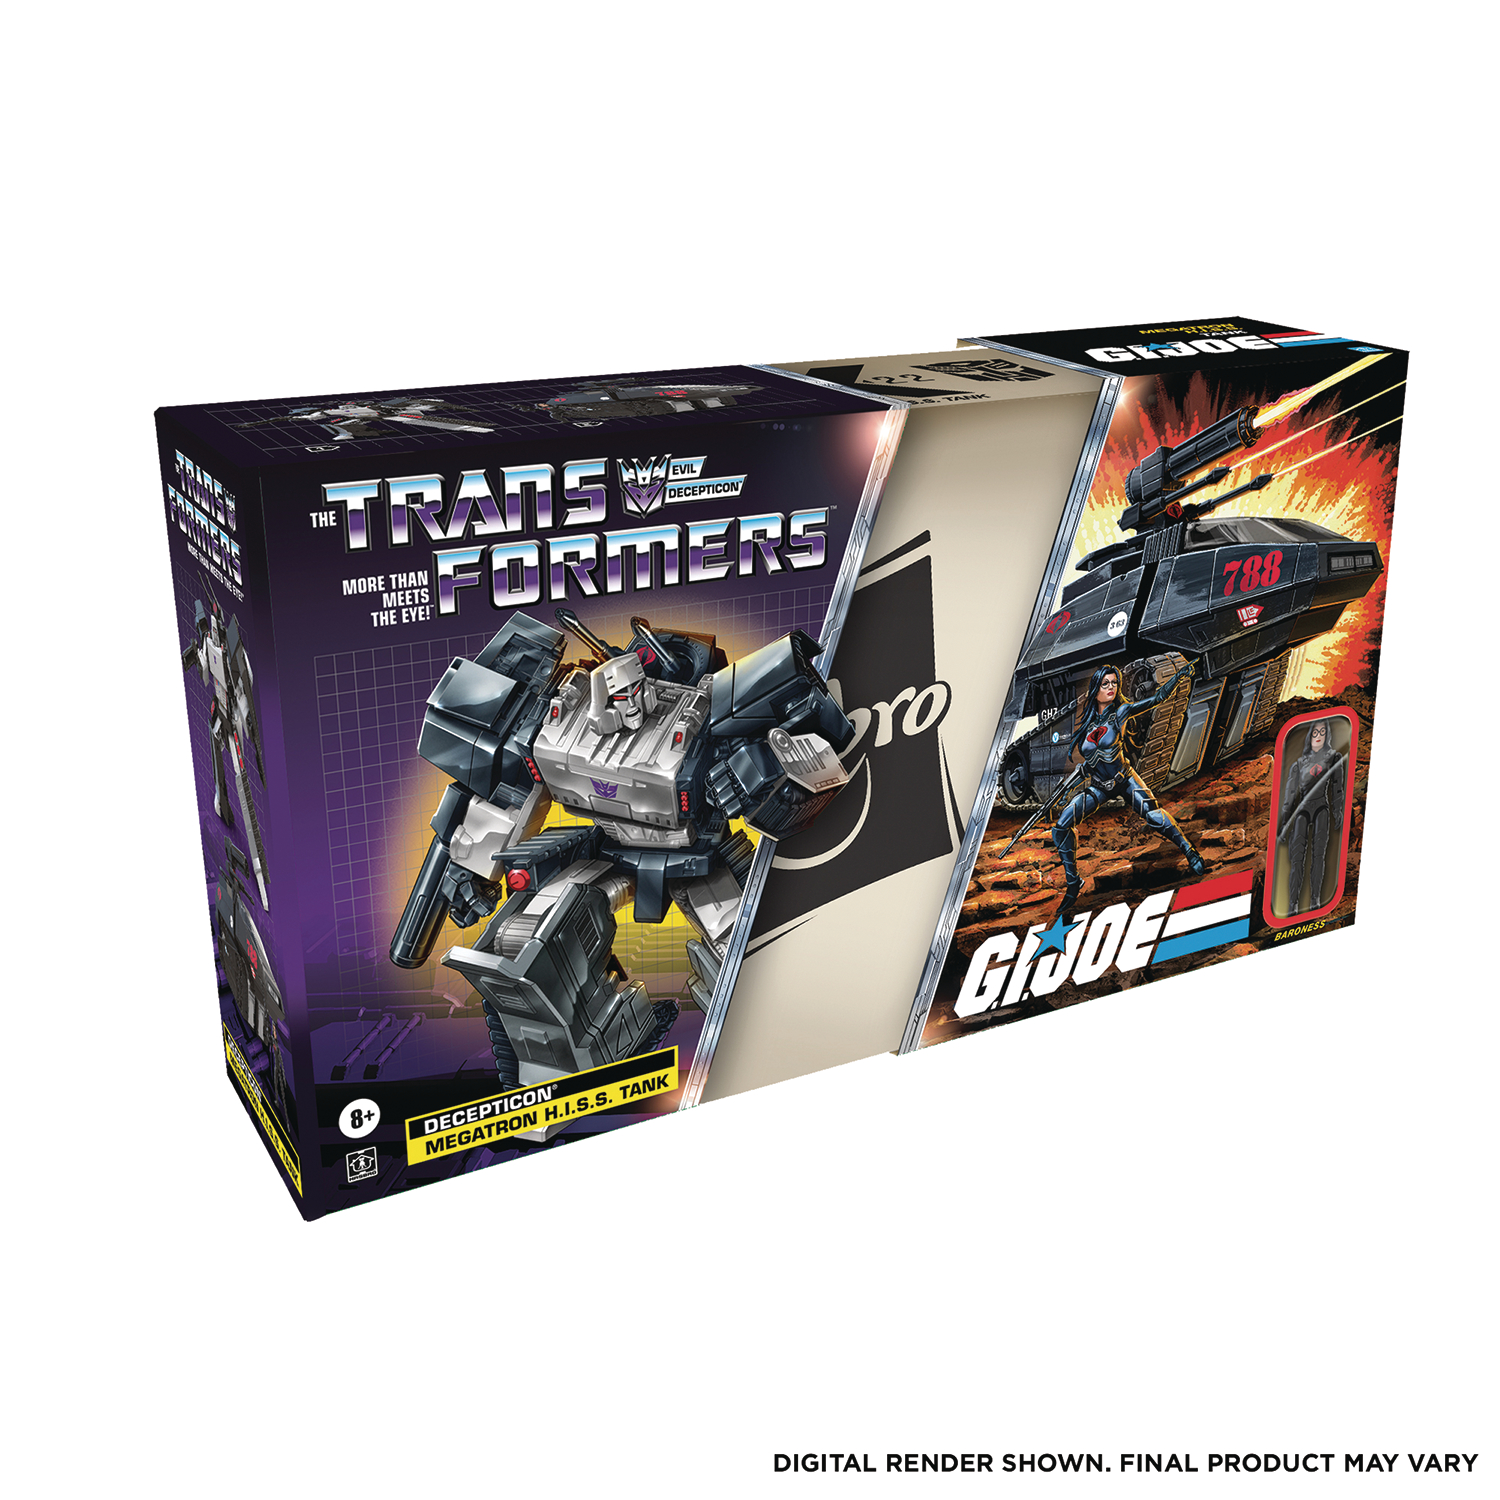 Transformers X GI Joe Megatron Hiss Tank Action Figure Case